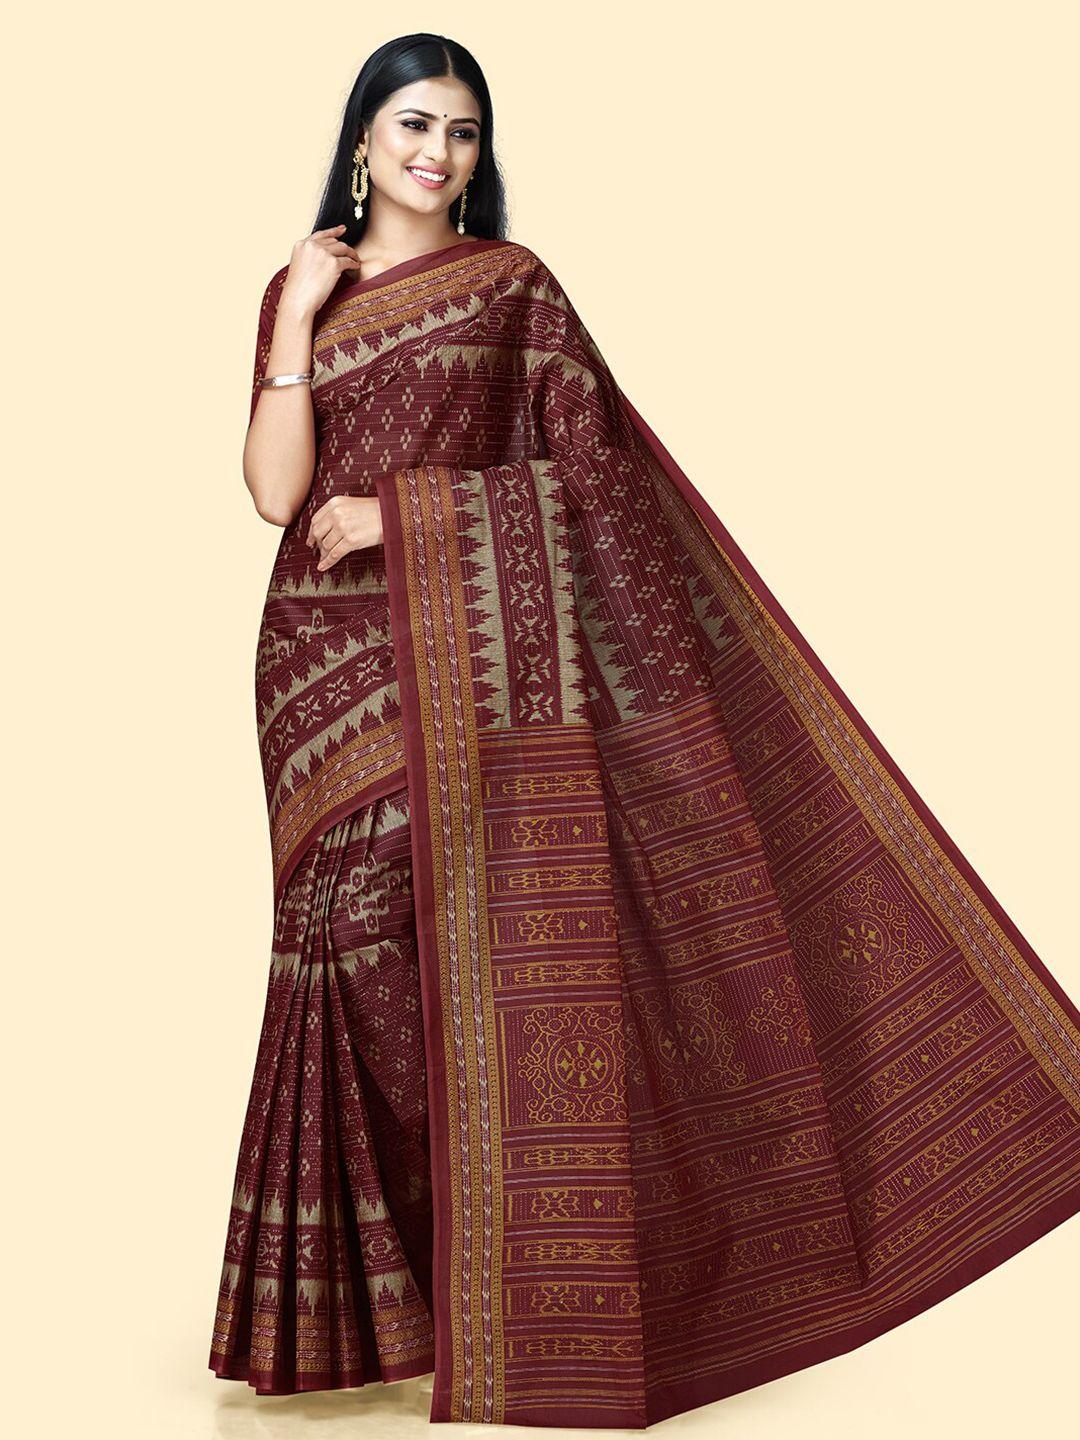 shanvika geometric printed pure cotton saree